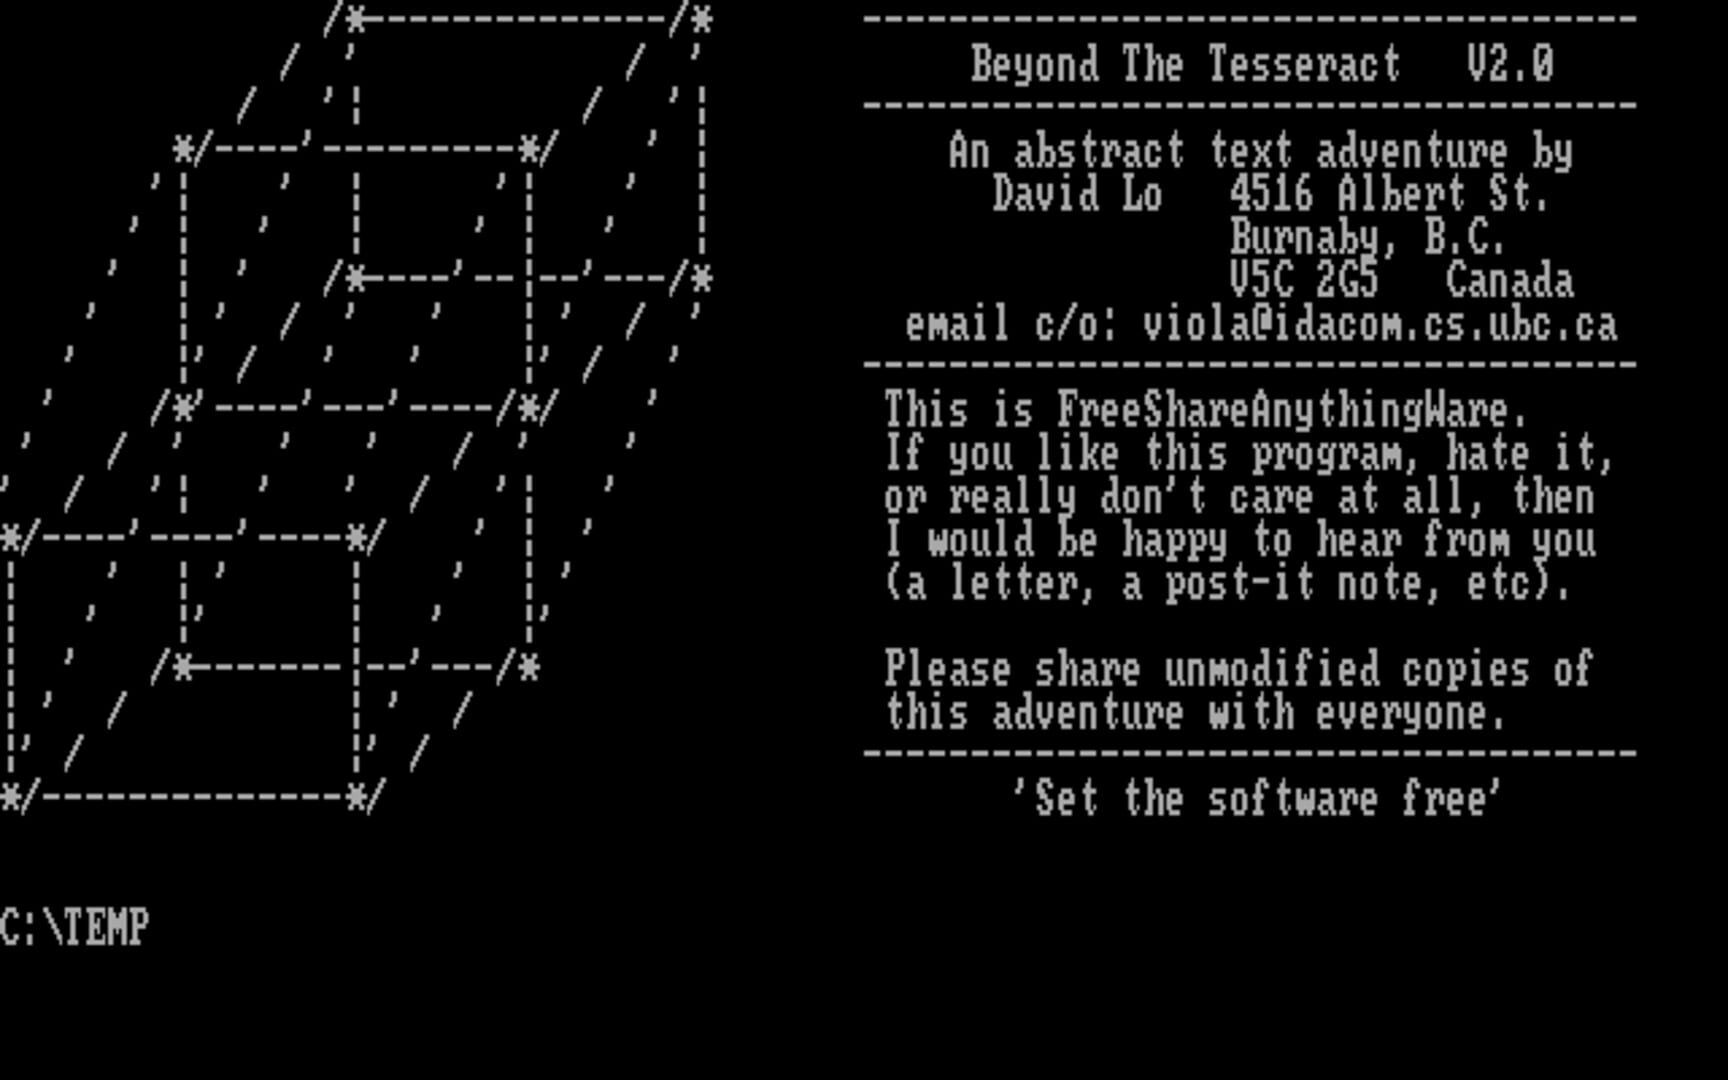 Tesseract python. Tesseract игра. Beyond the Tesseract. Библиотеки Tesseract. Размер изображения для Tesseract.